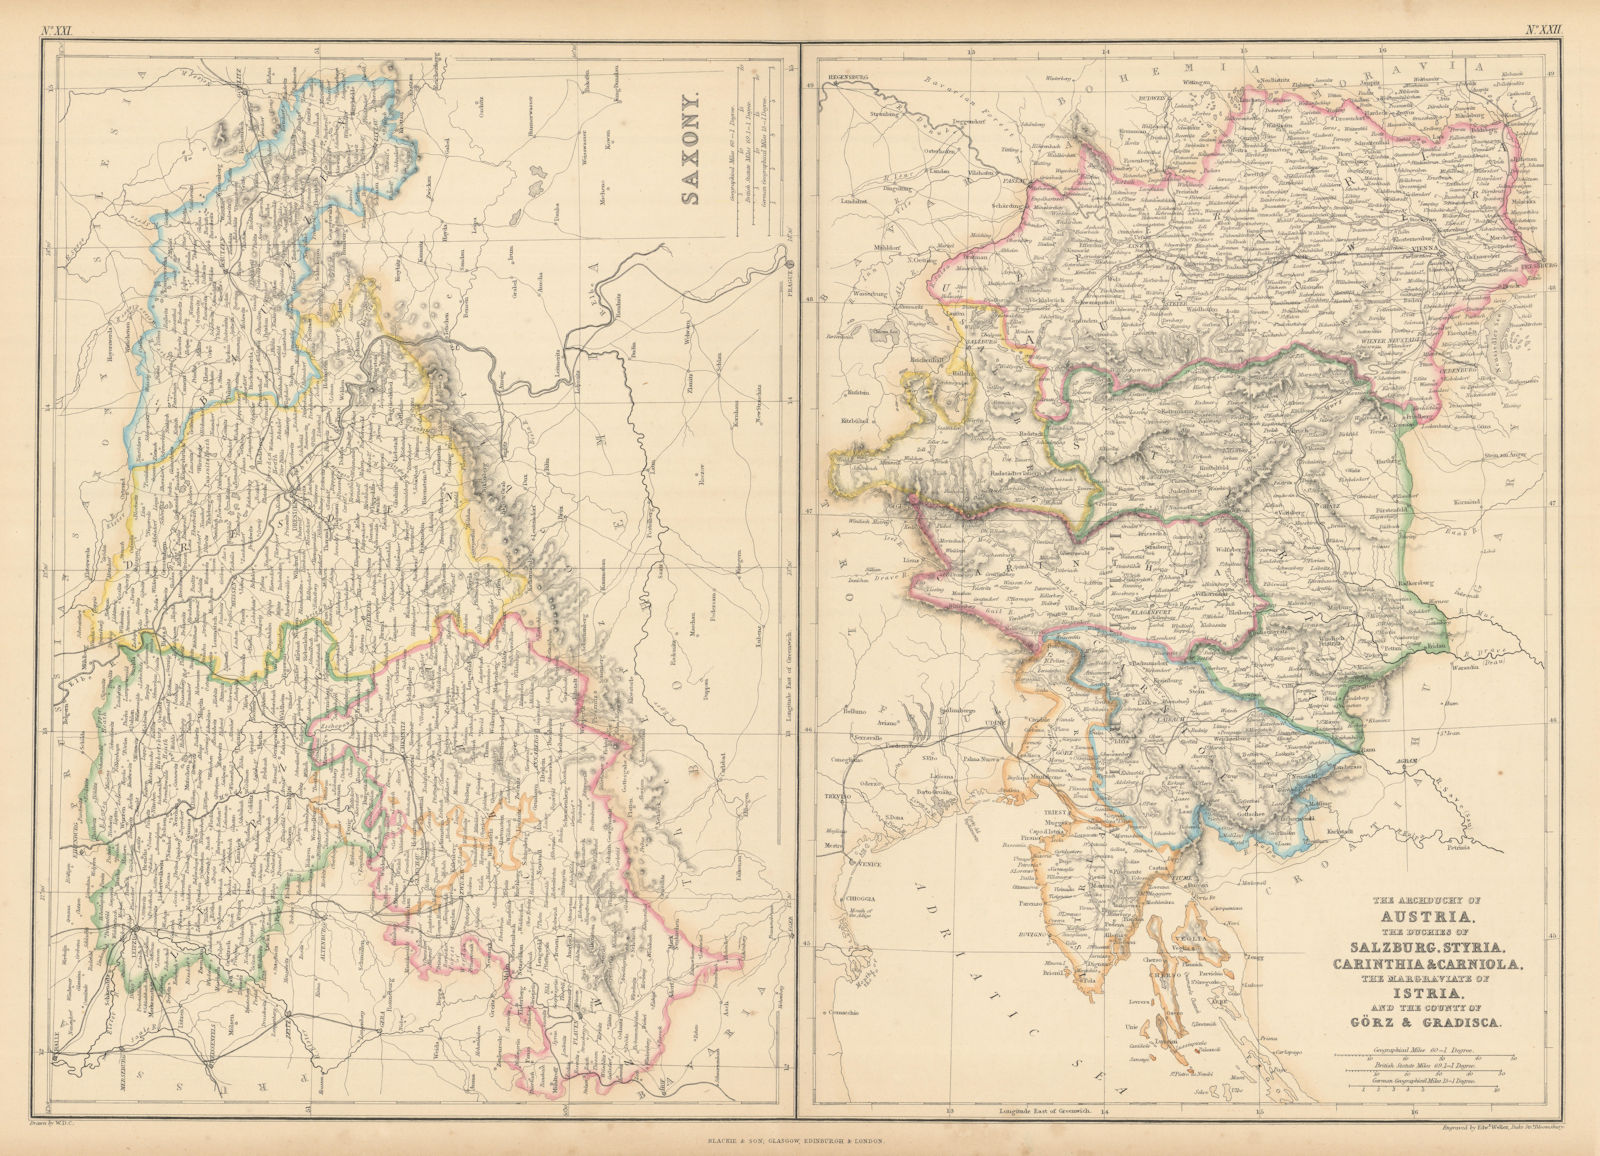 Saxony. Archduchy of Austria. Salzburg, Styria… Slovenia Istria. WELLER 1859 map